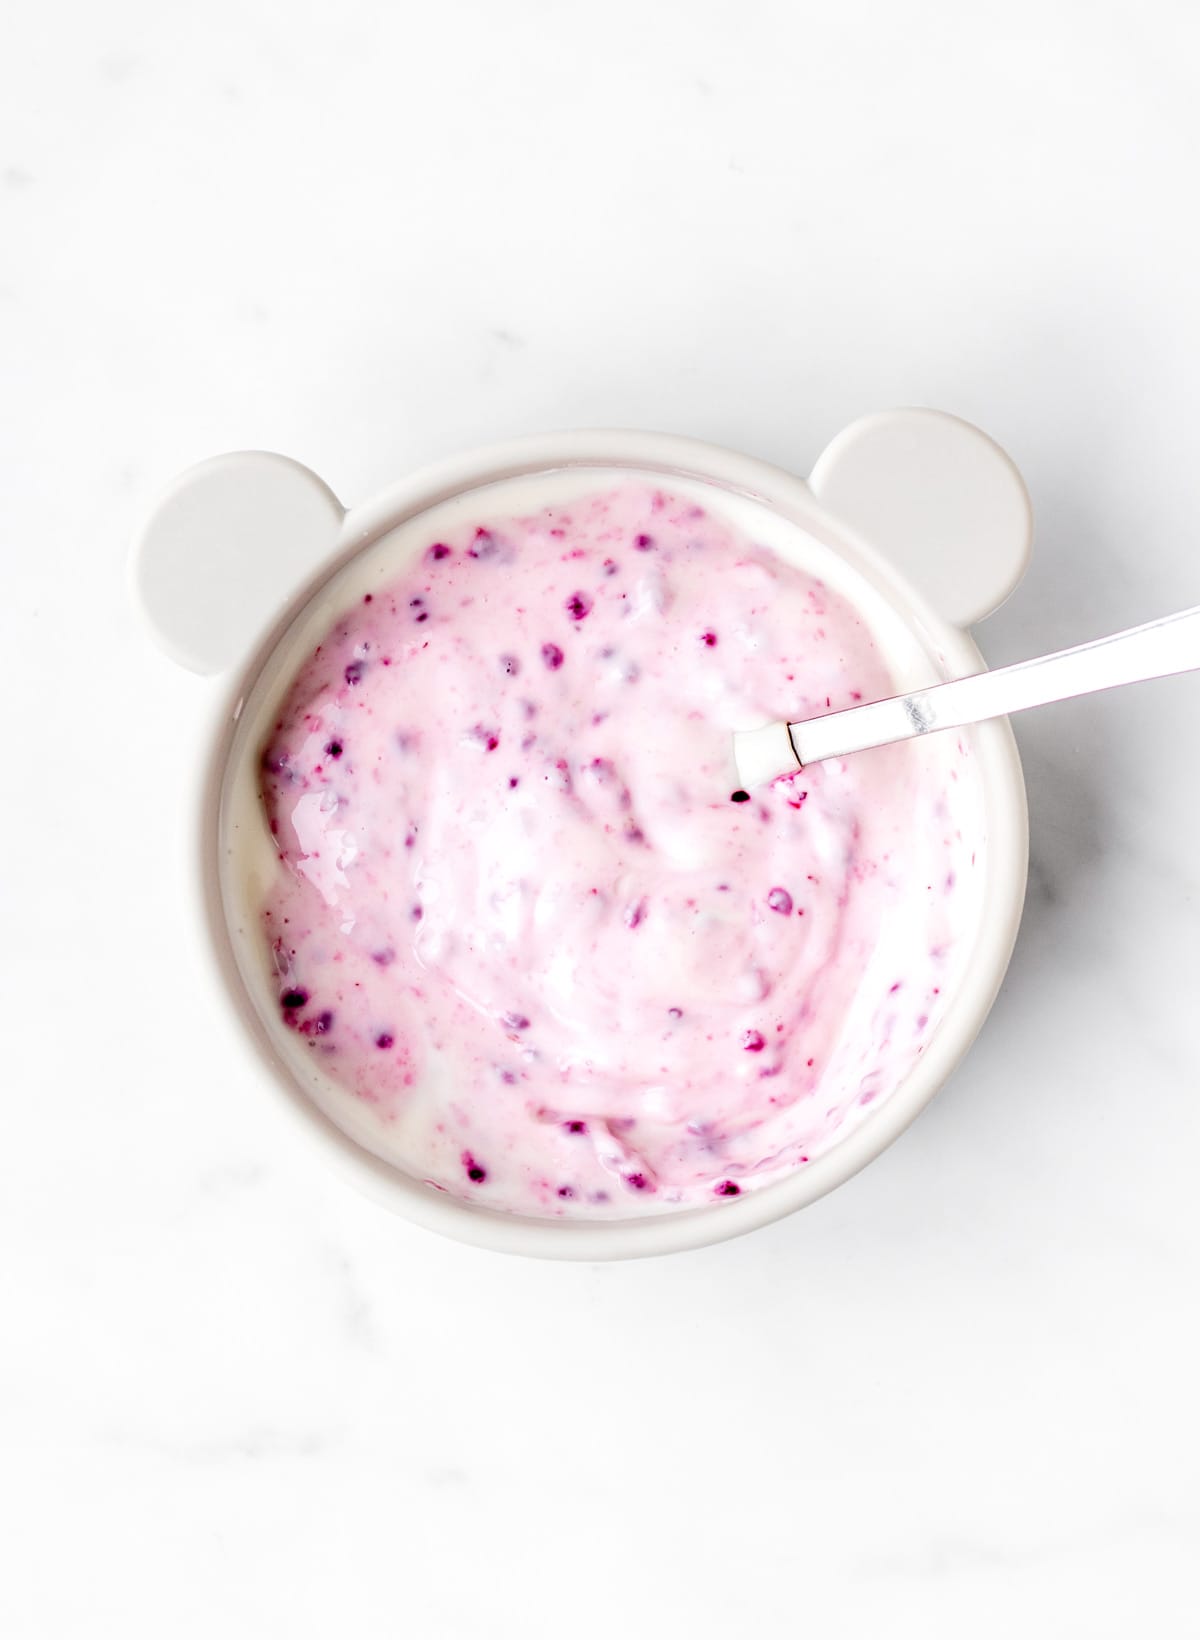 Mixed berry chia jam mixed into yogurt in a teddy bear bowl.